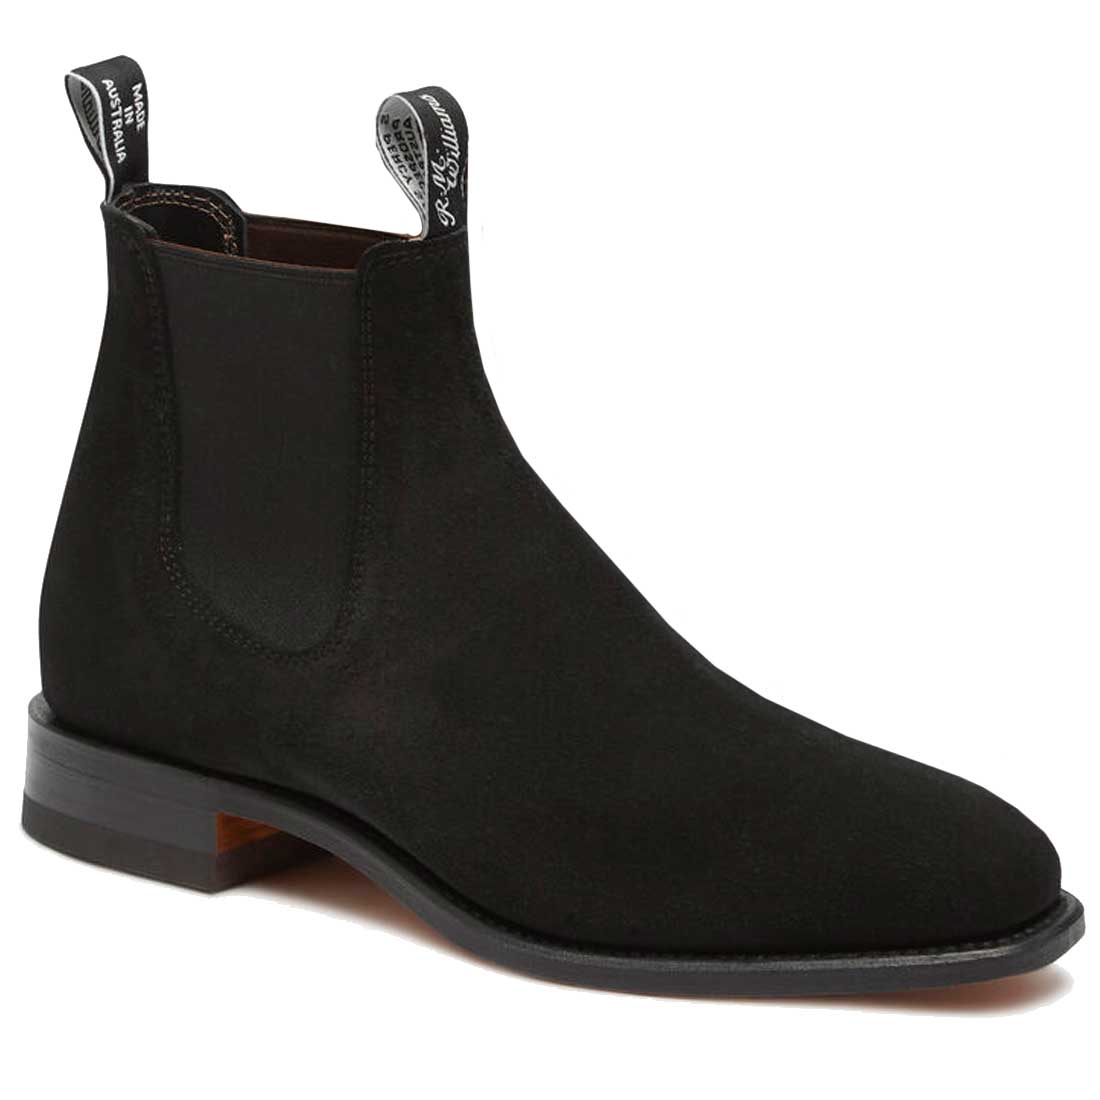 RM WILLIAMS Boots - Men's Classic Craftsman - Black Suede